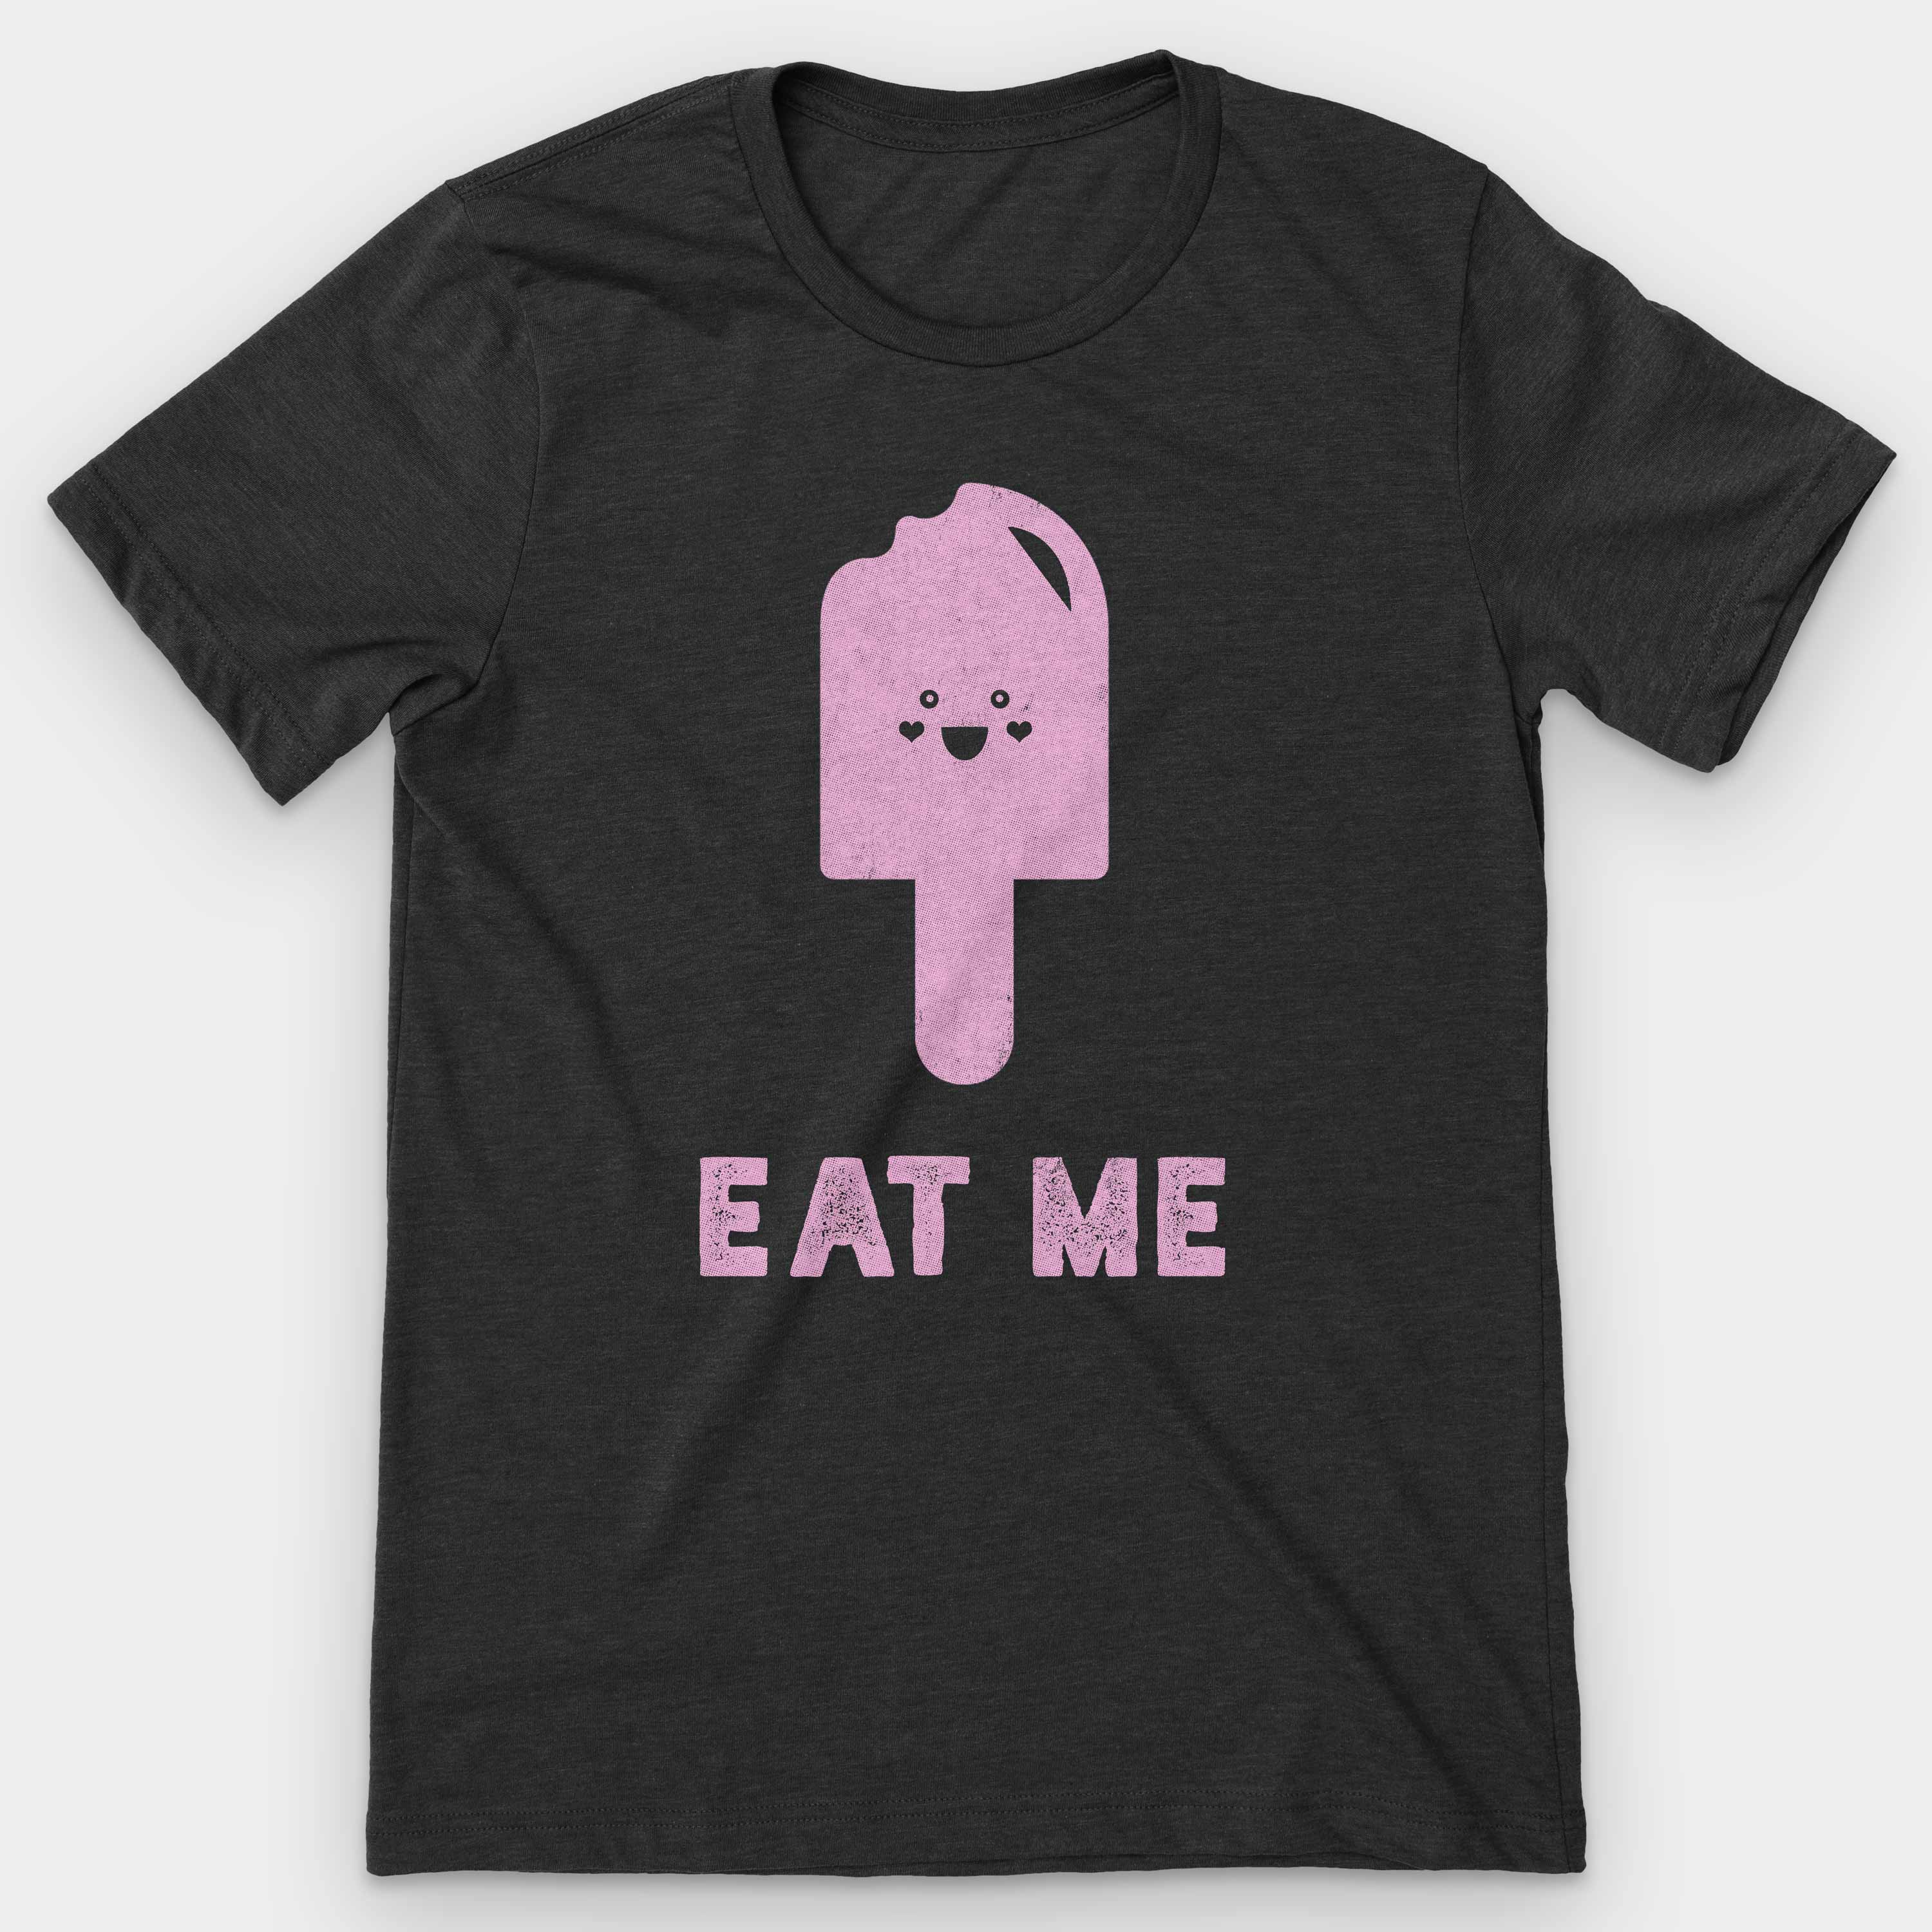 EATME BACKグラフィックTシャツ